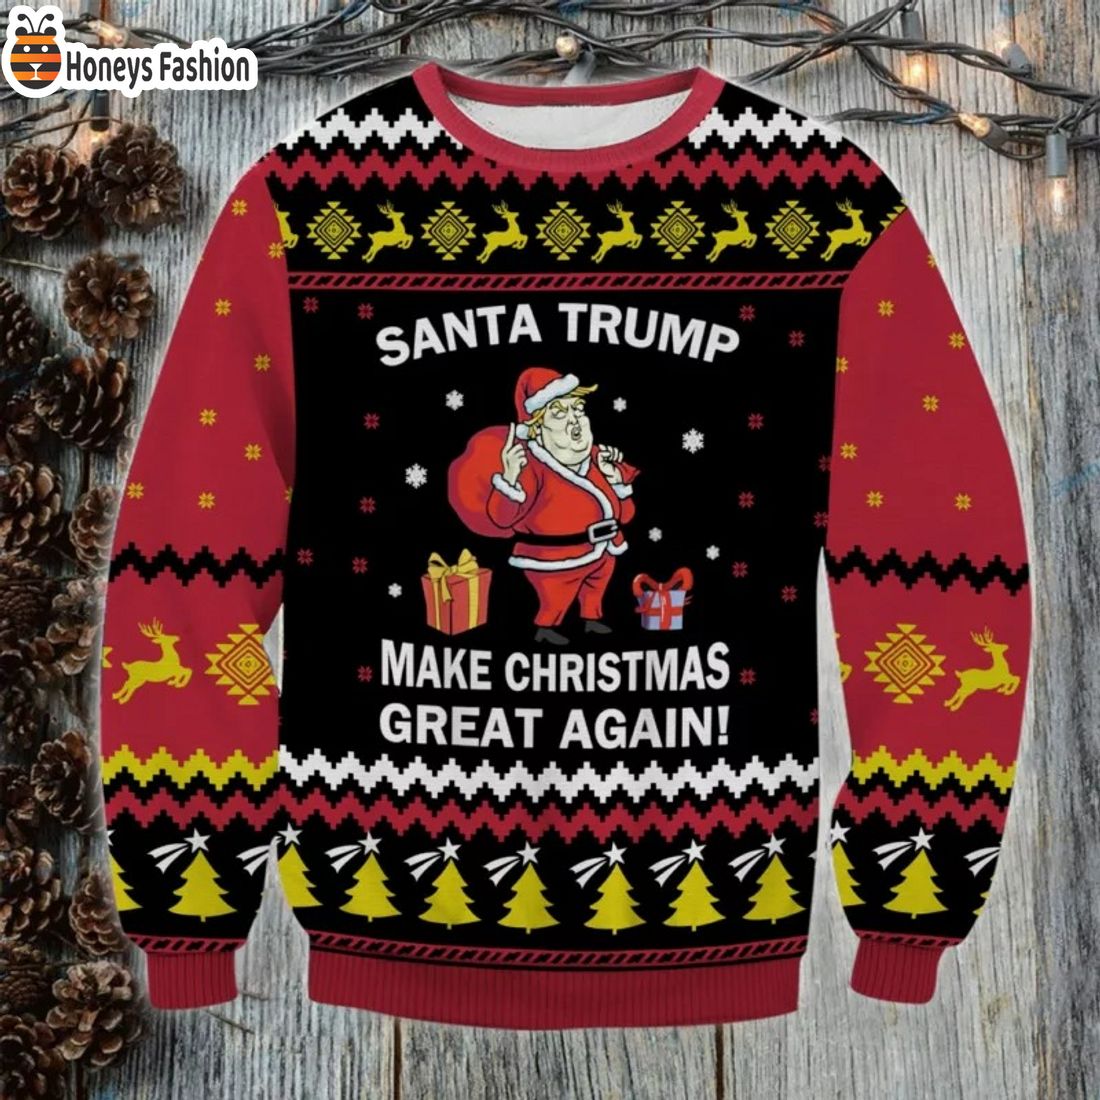 HOT HOT HOT Santa Trump Make Christmas Great Again Ugly Sweater